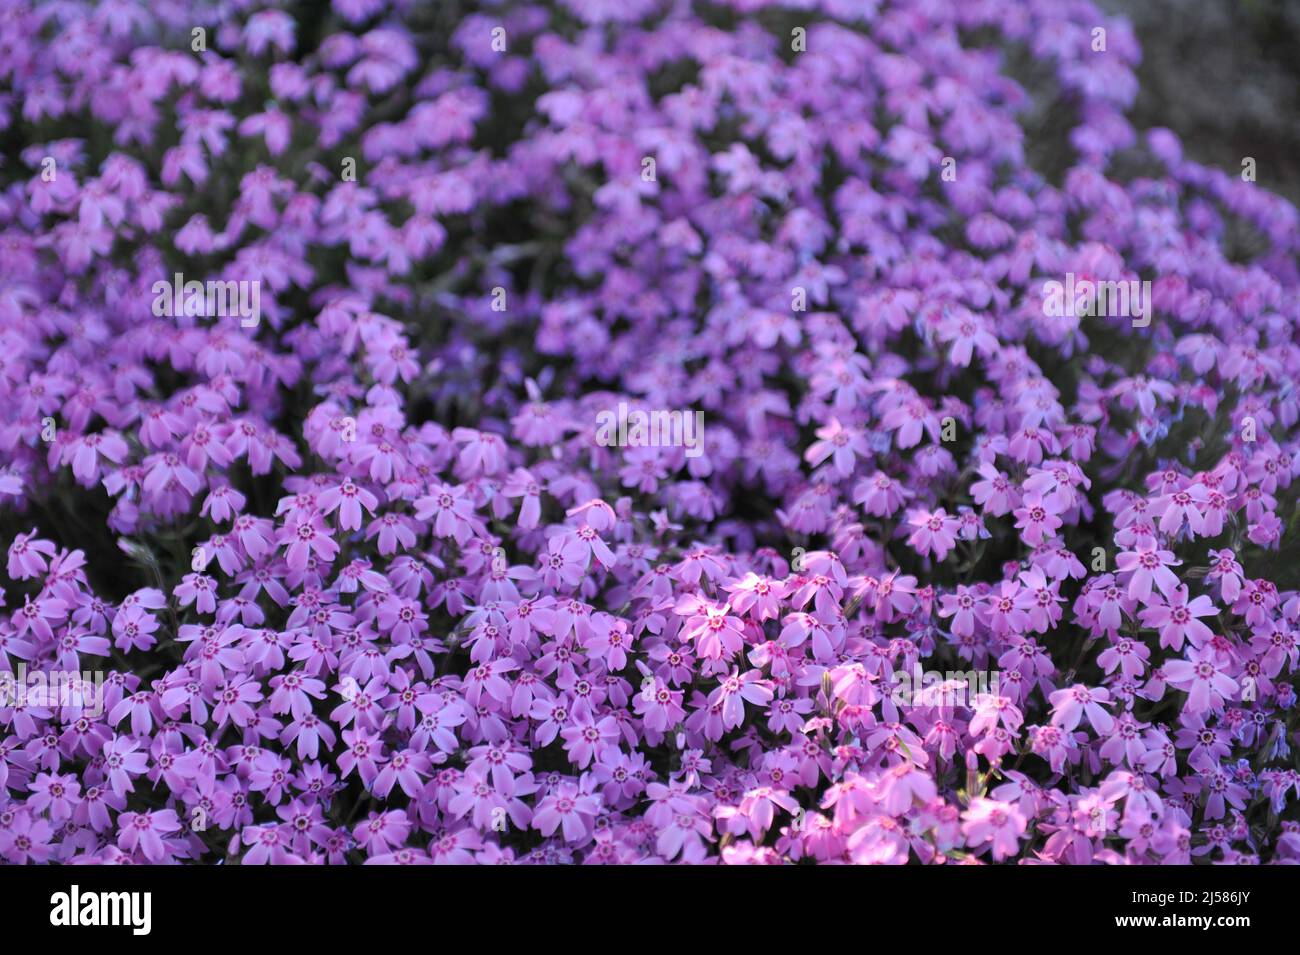 Phlox subulata purple beauty hi-res stock photography and images - Alamy